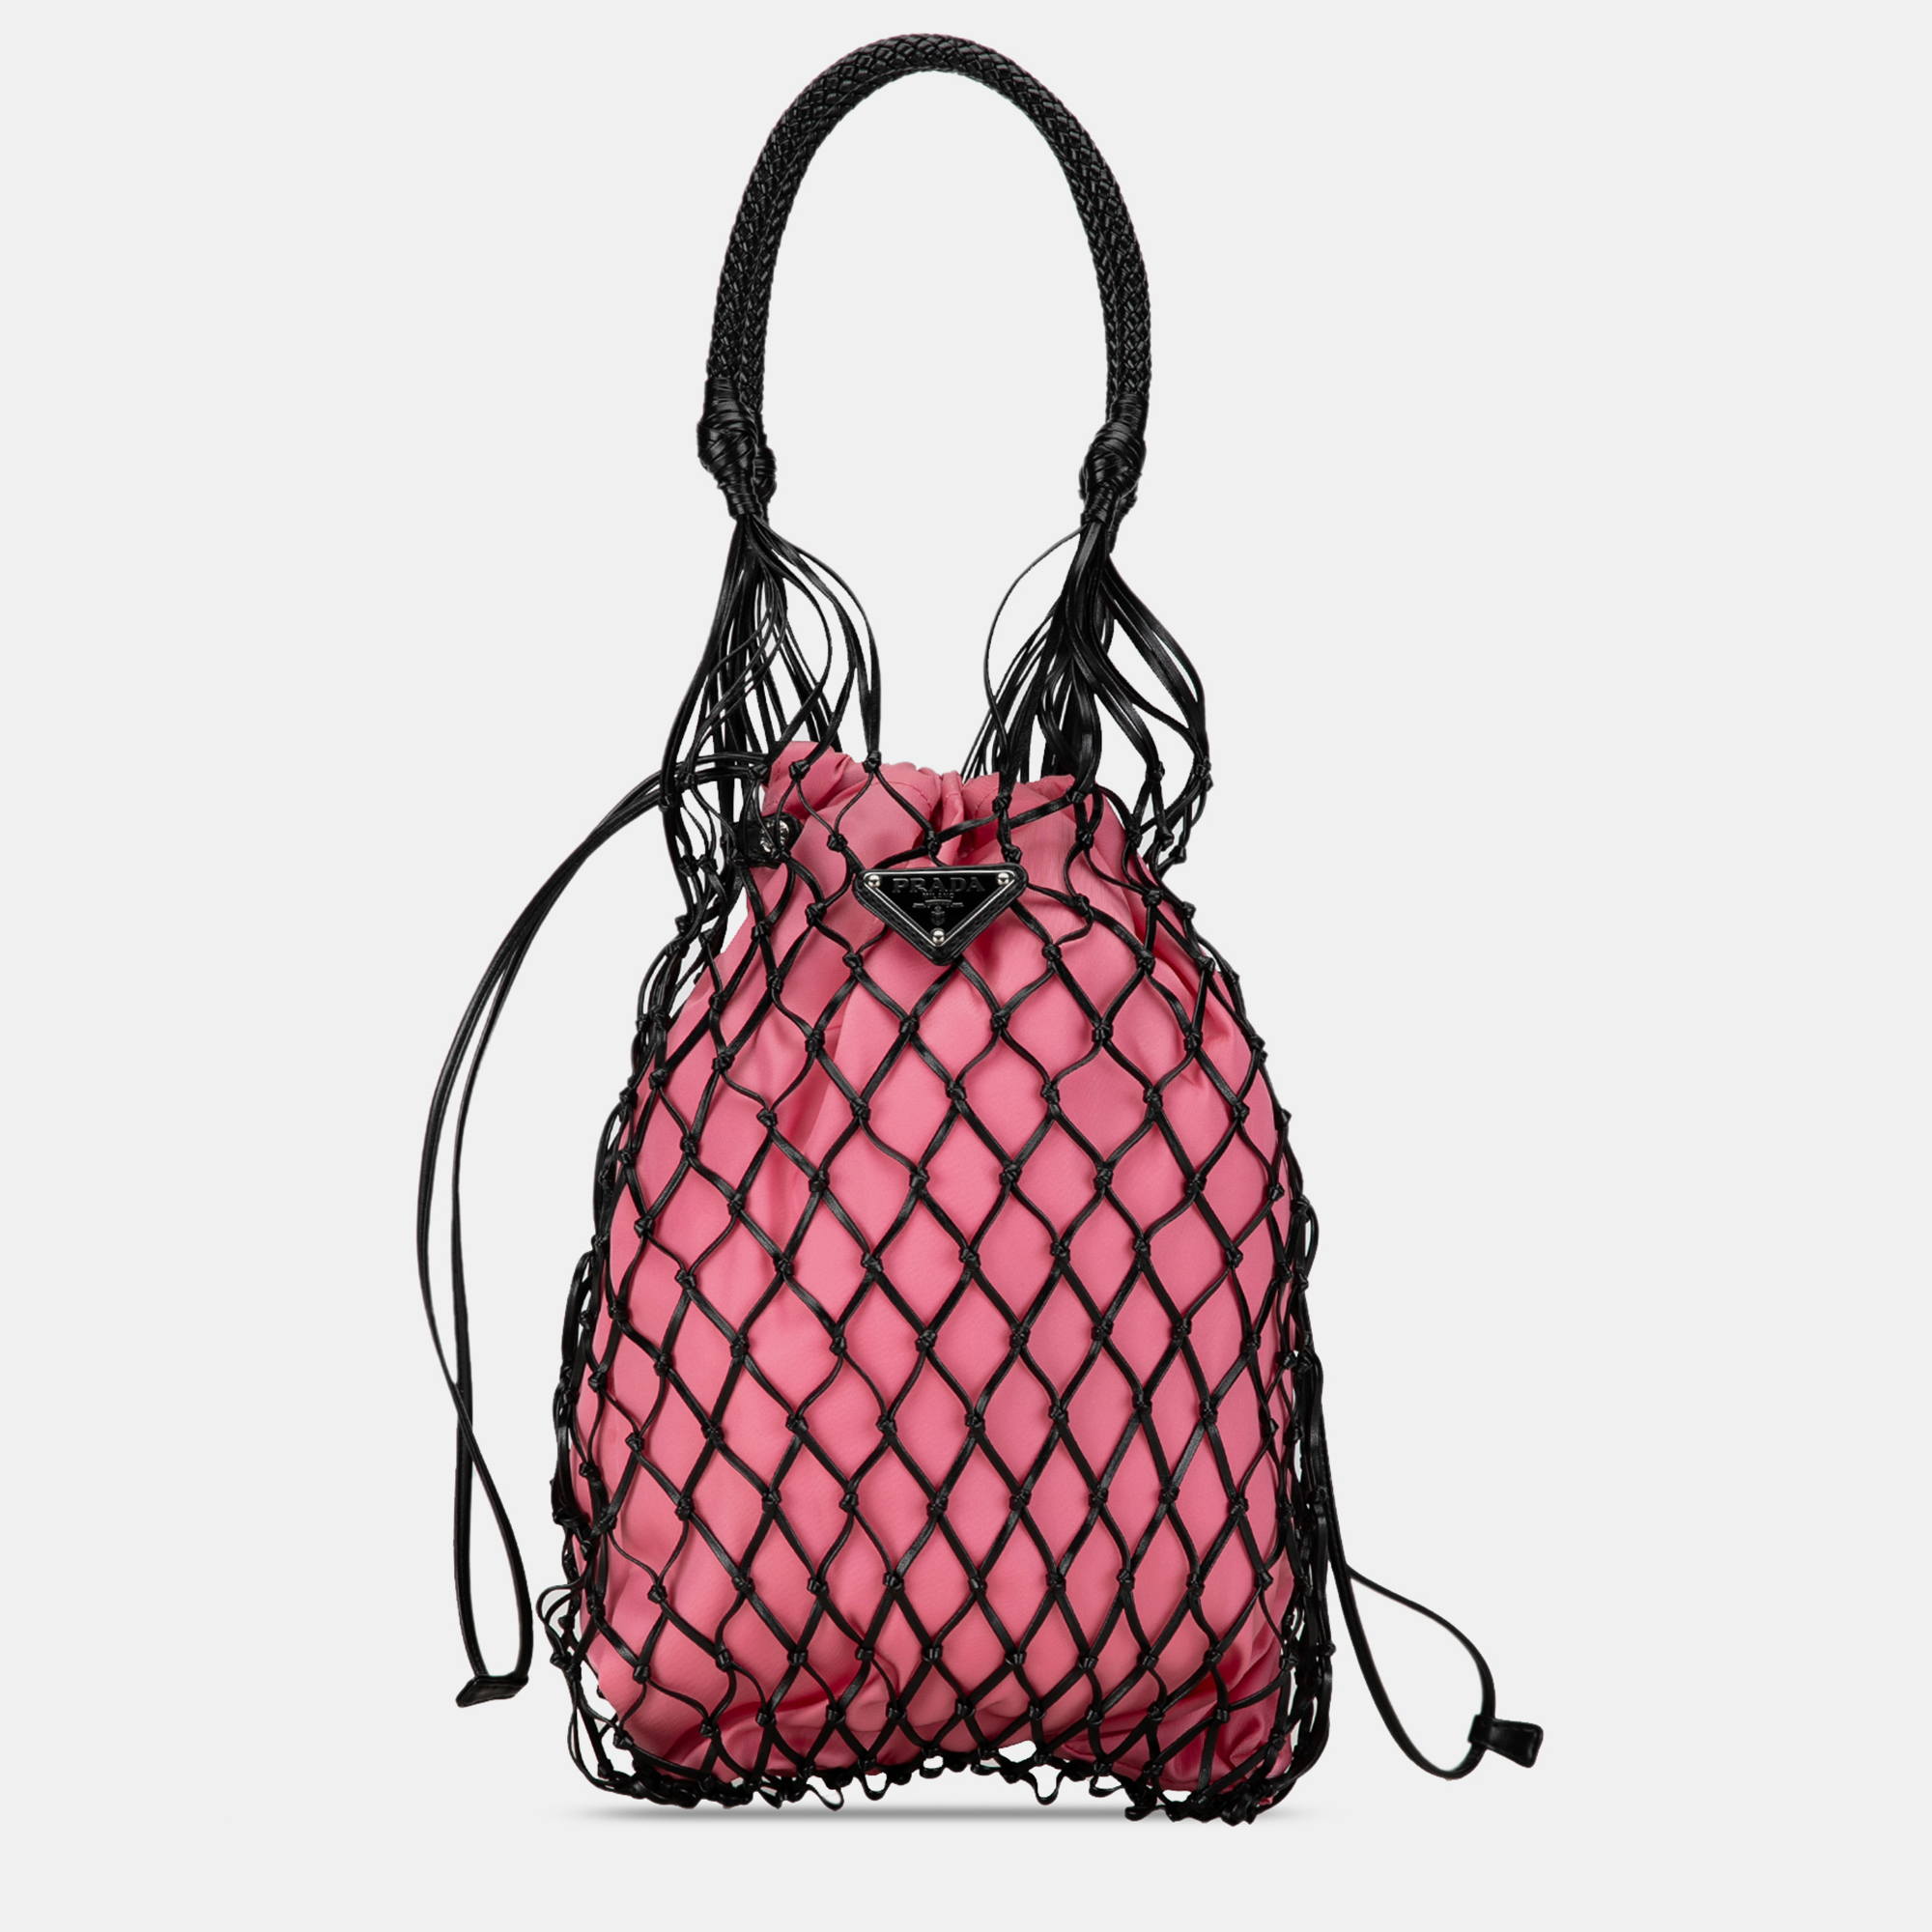 Prada leather and satin net handbag